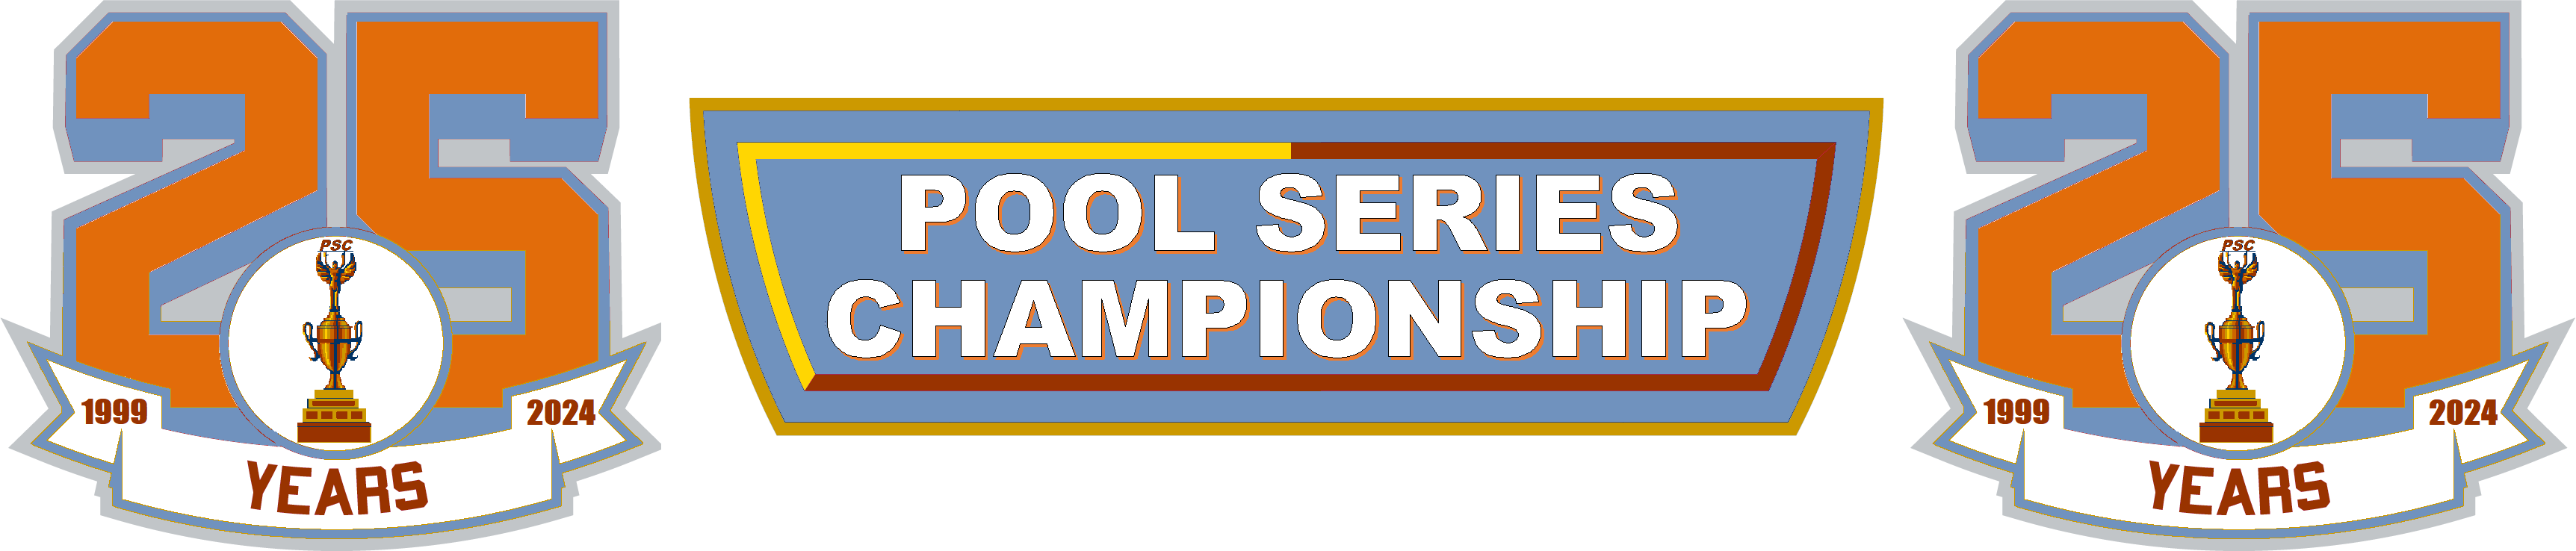 Pool Series Championship